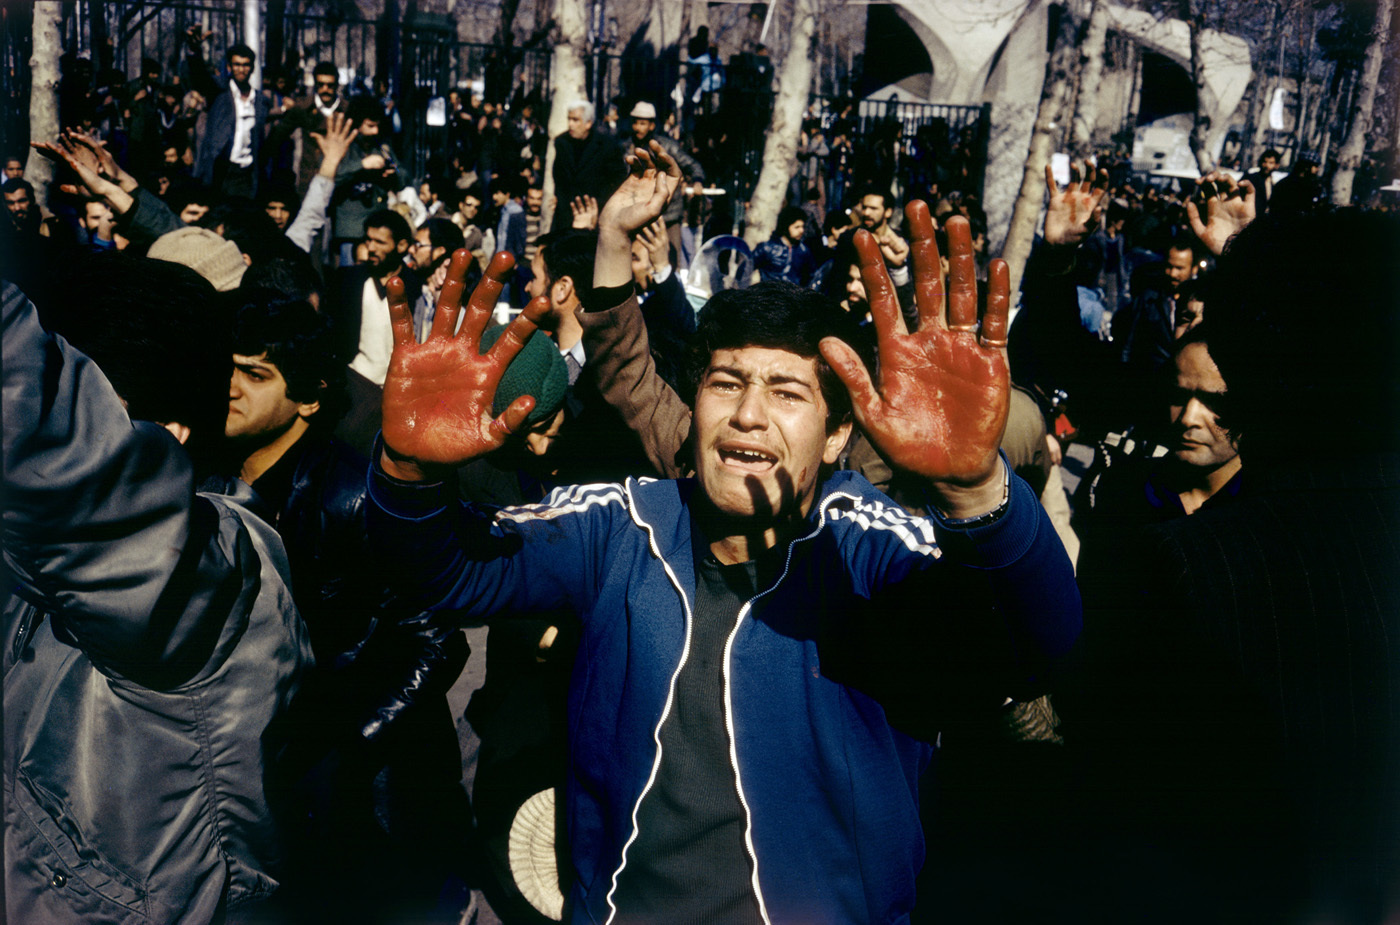 Bloody hands: Another martyr has fallen-The Iran Revolution : Classics, Old & New : David Burnett | Photographer